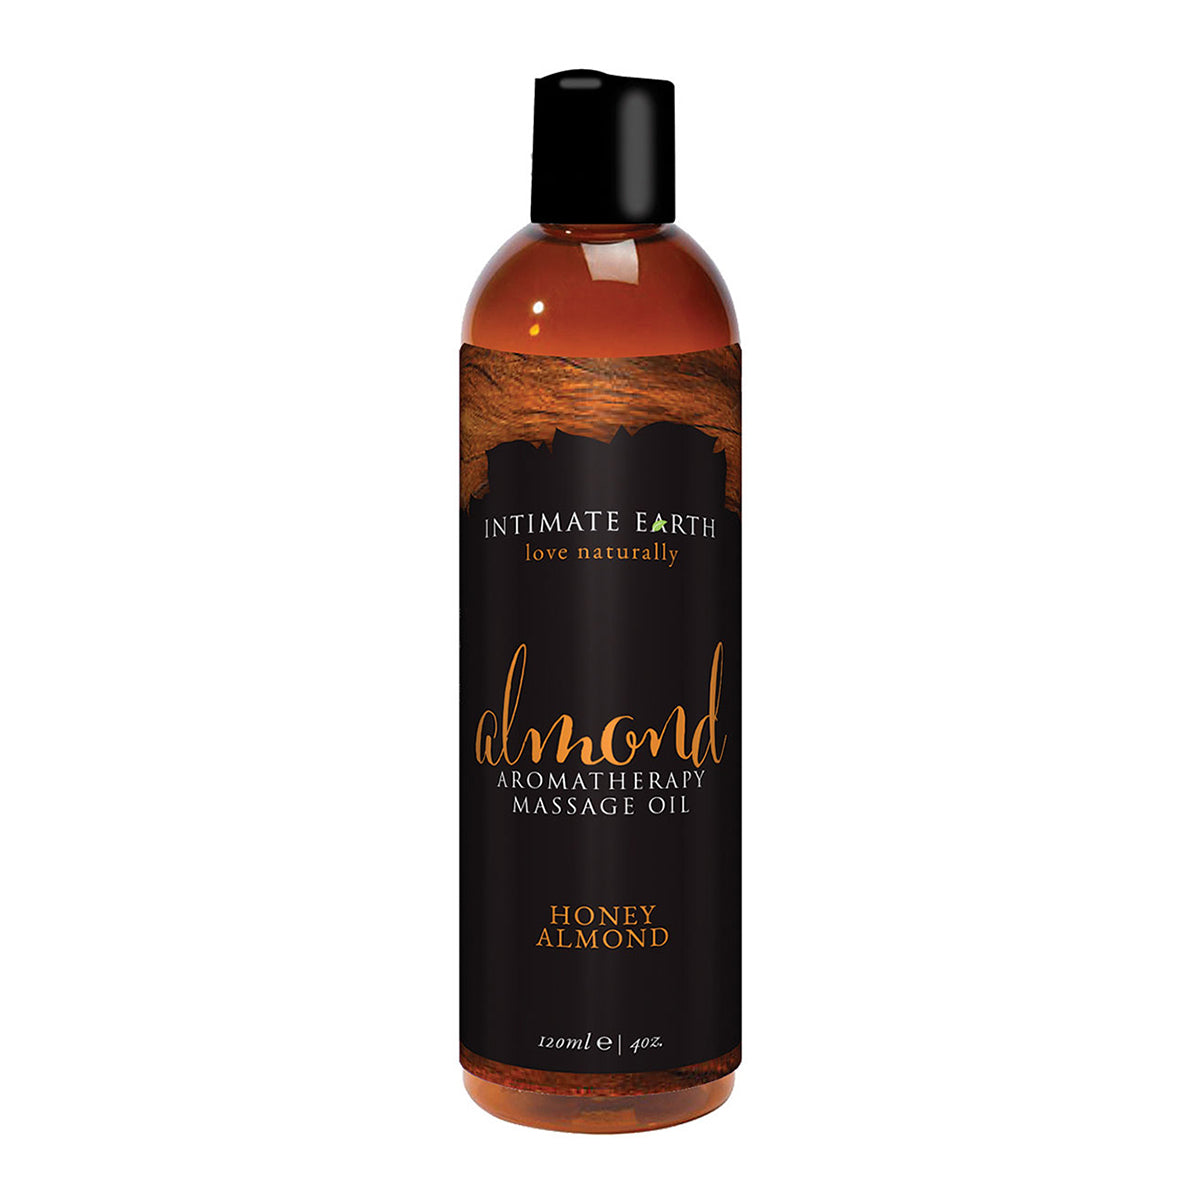 Intimate Earth Aromatherapy Massage Oil - Almond 4oz